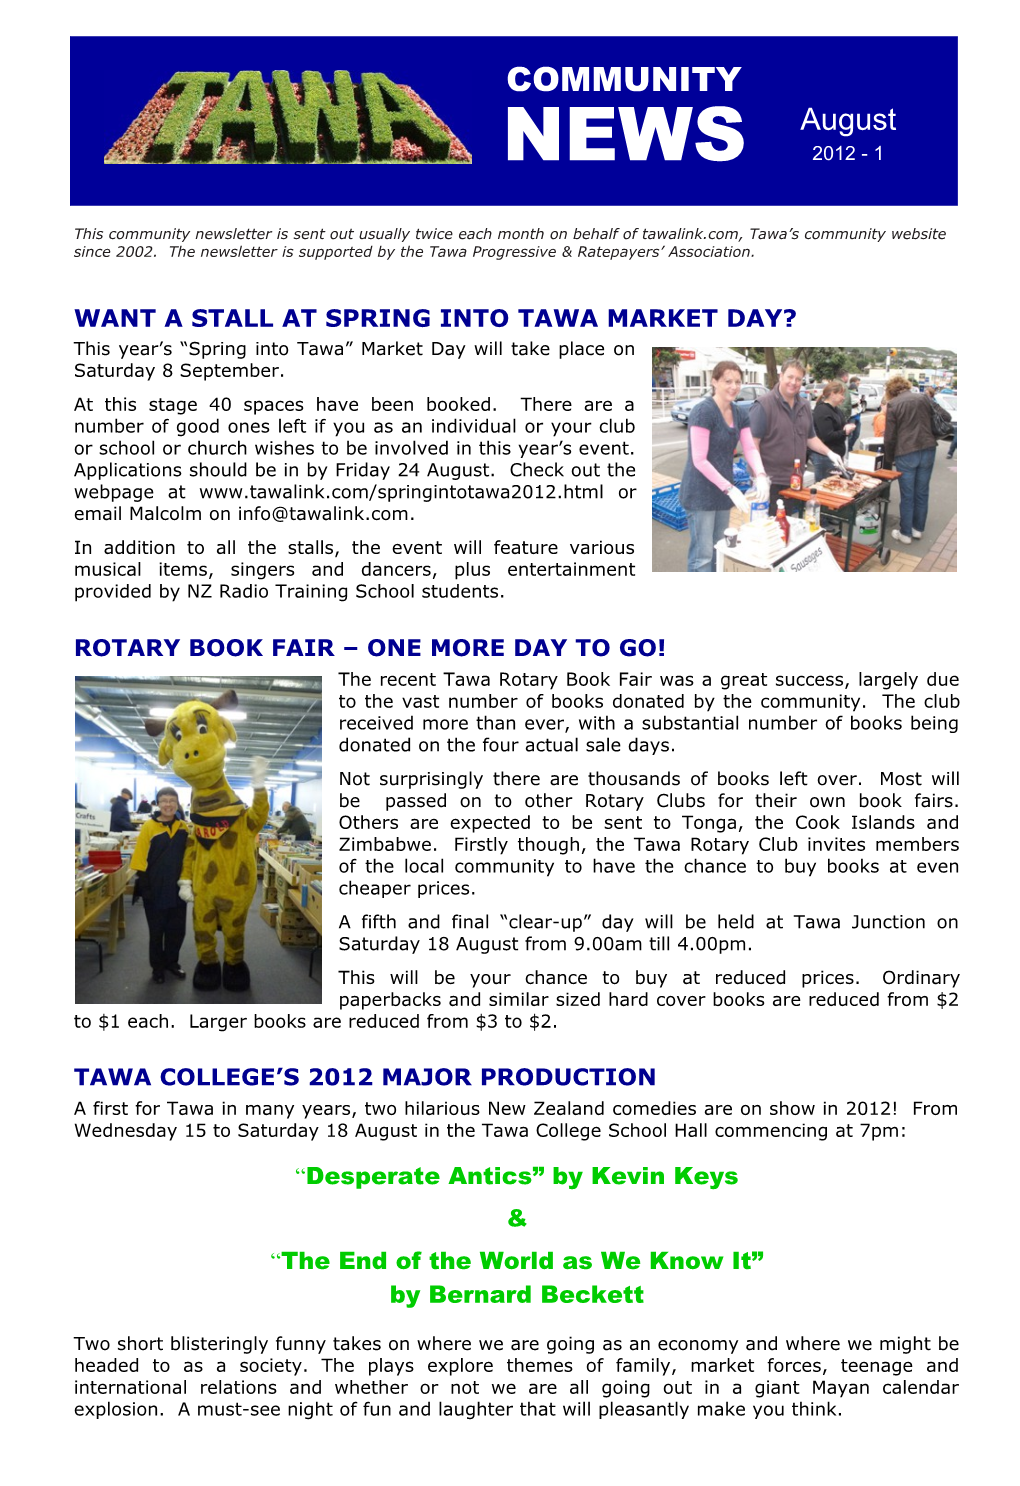 Want a Stall at Spring Into Tawa Market Day?